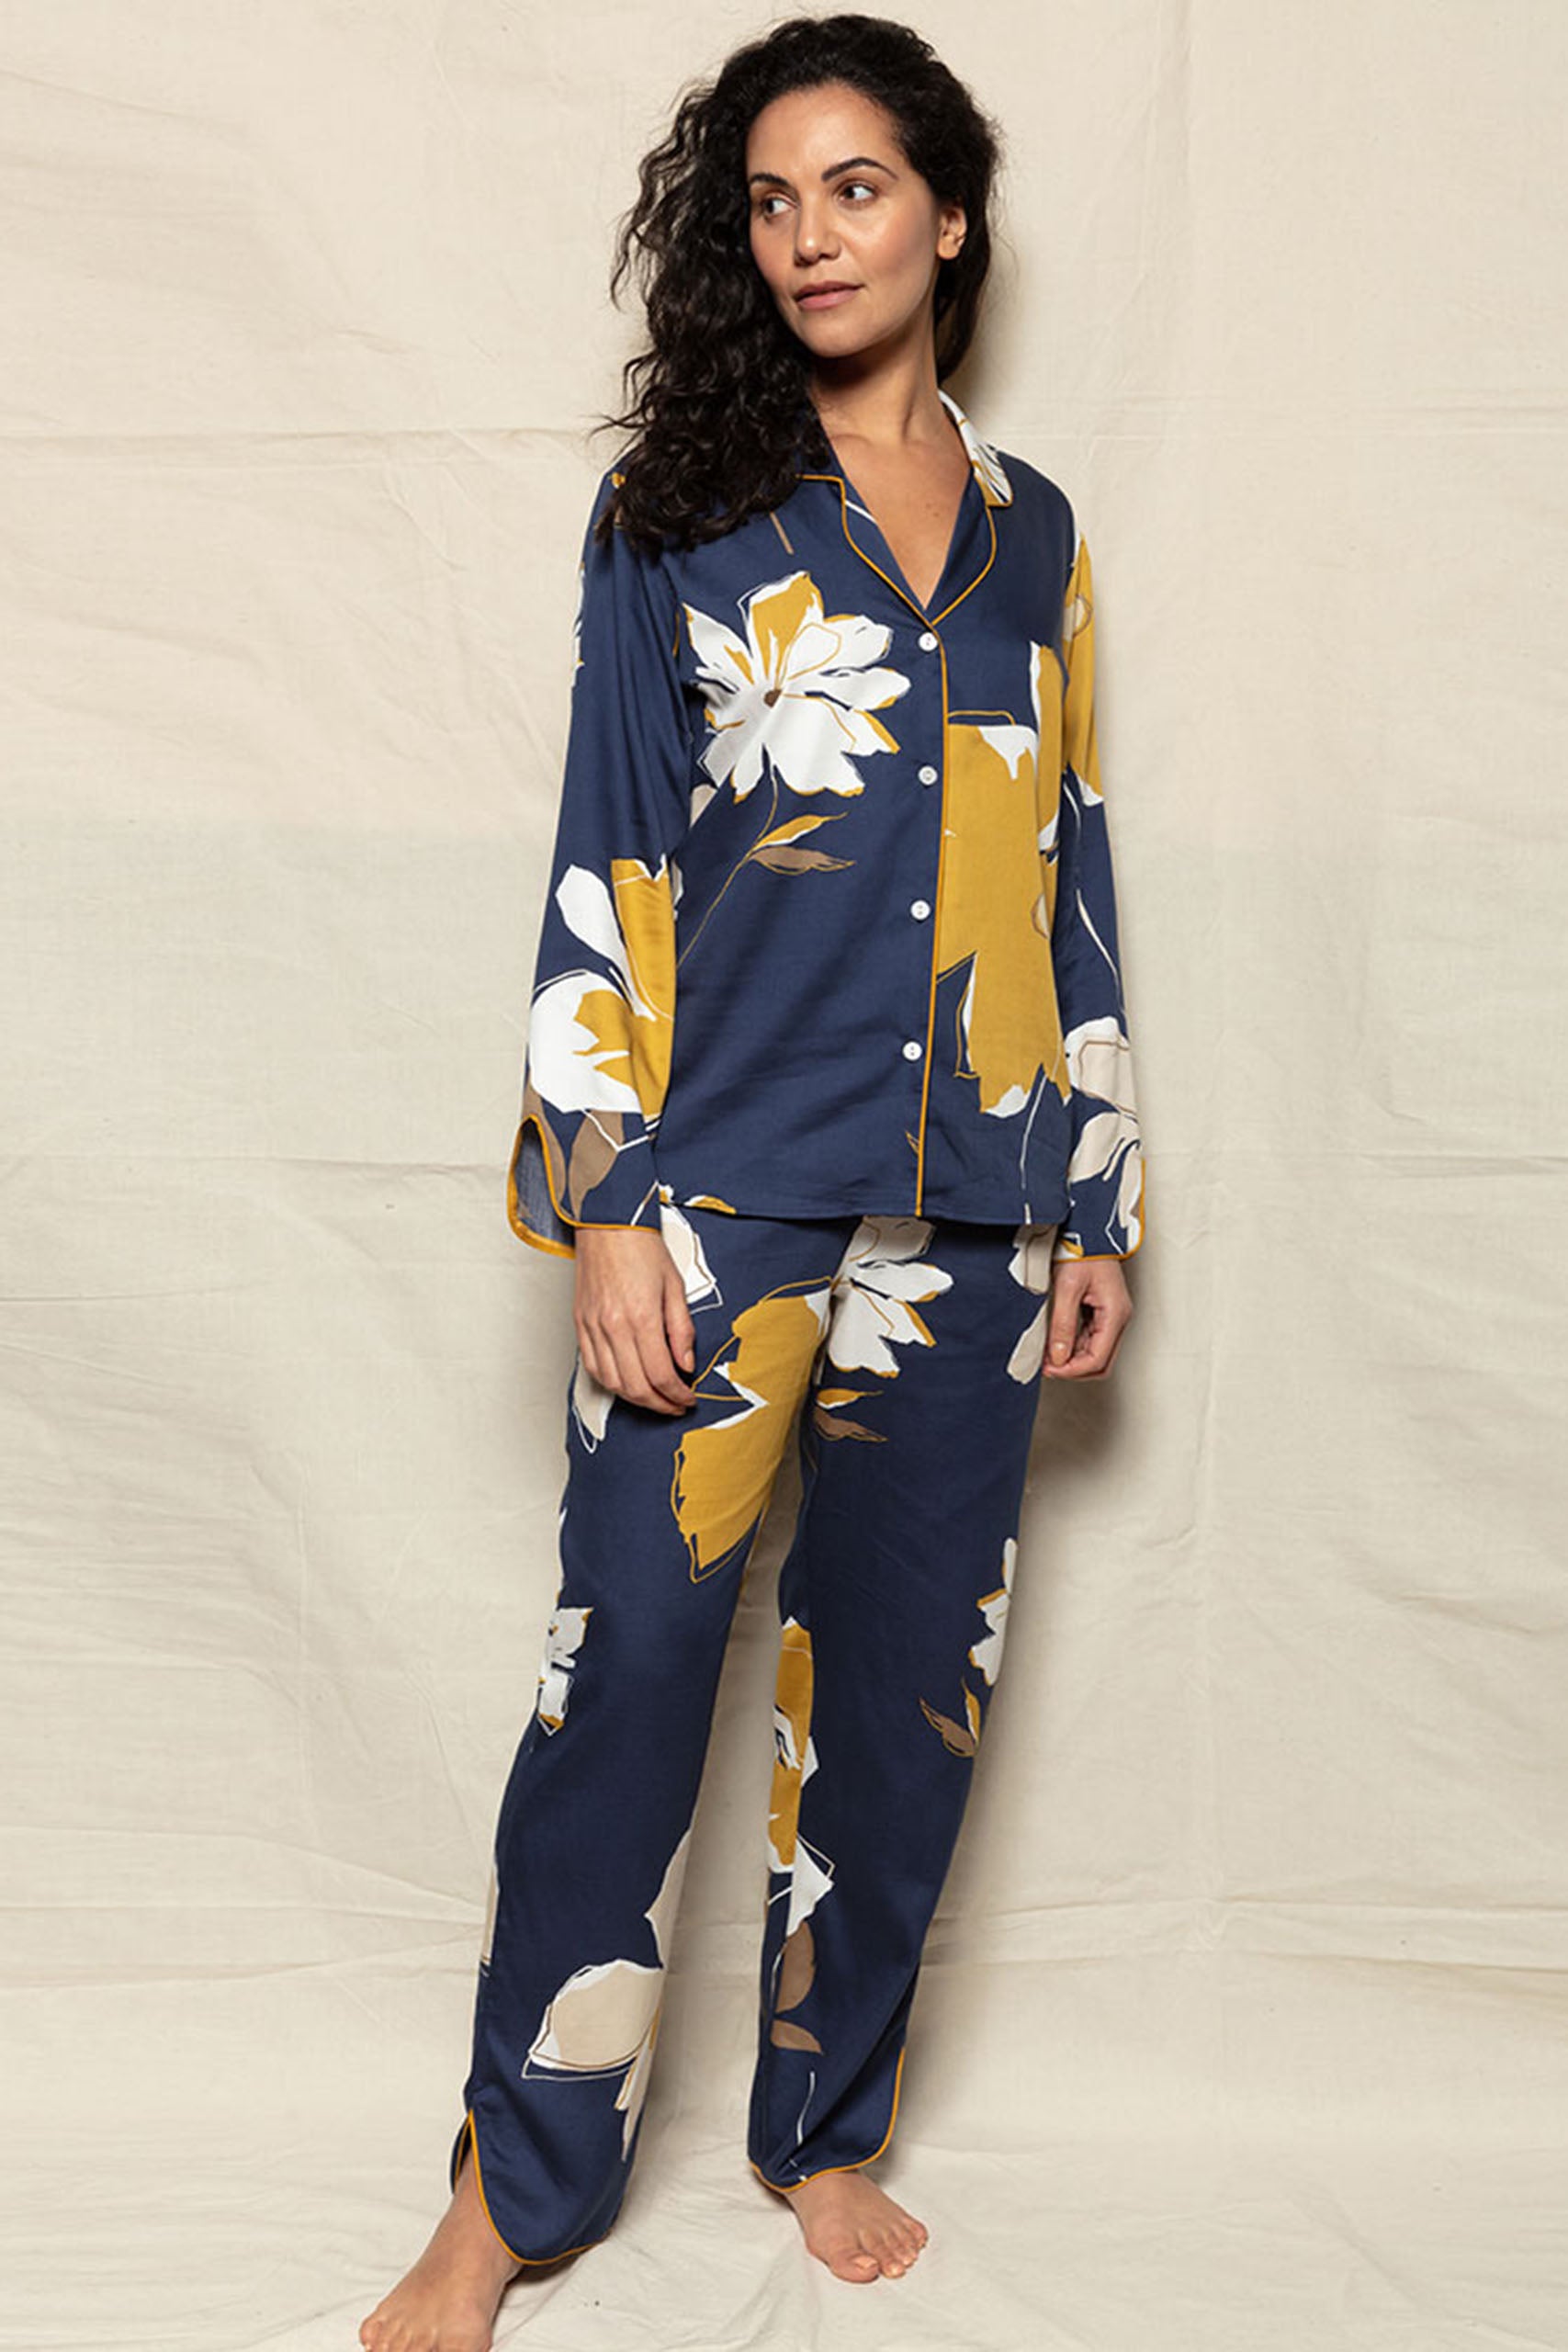 Notting Hill Floral Print Pyjama Set